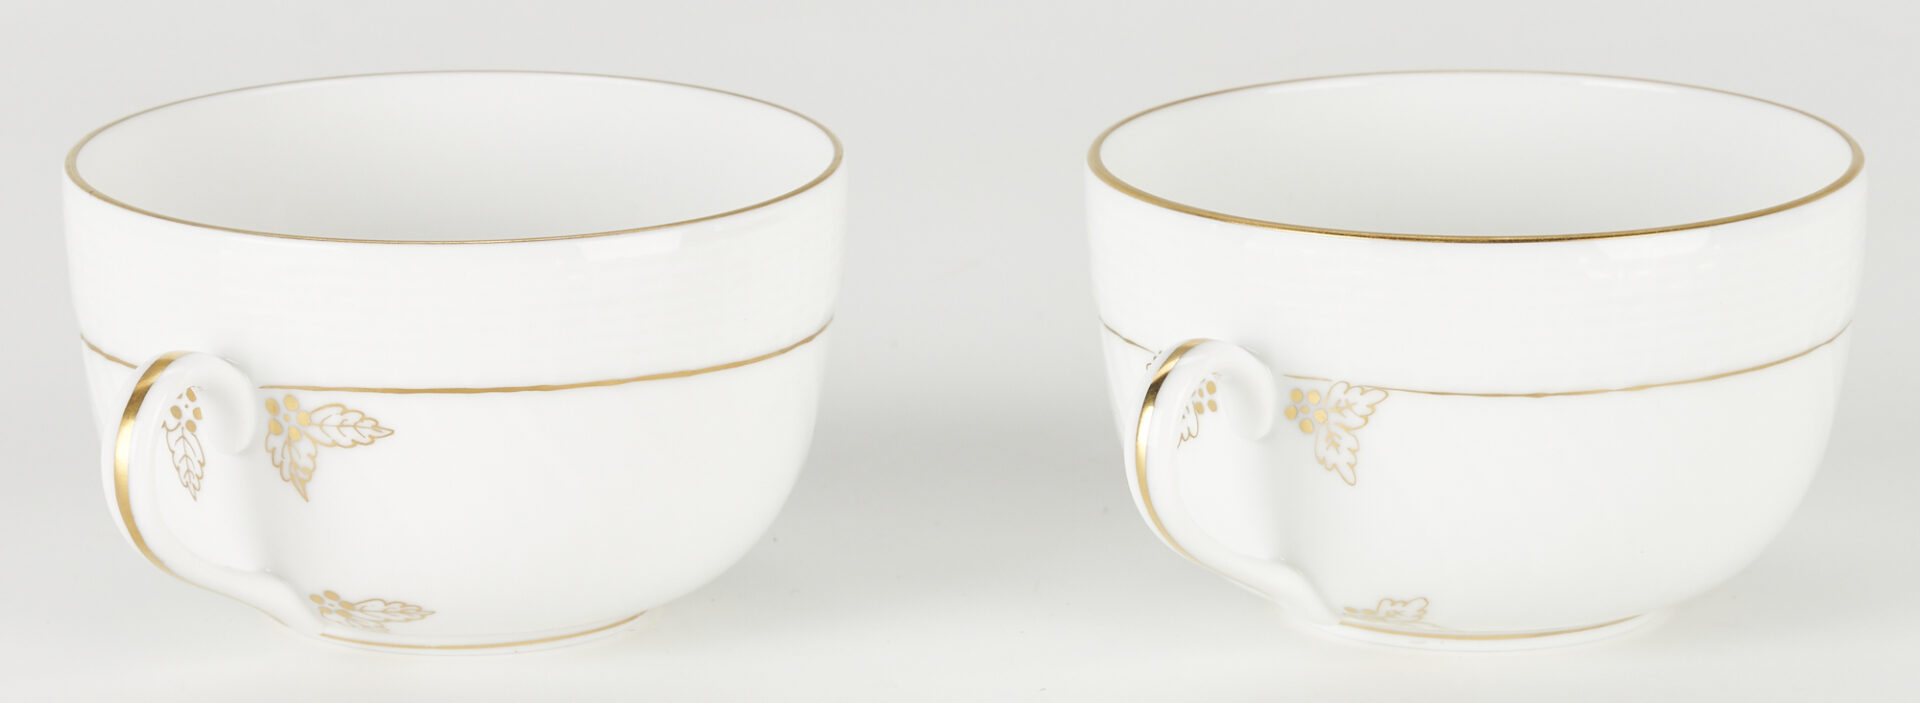 Lot 51: Herend Golden Edge Pattern Porcelain Cups & Saucers, 20 total